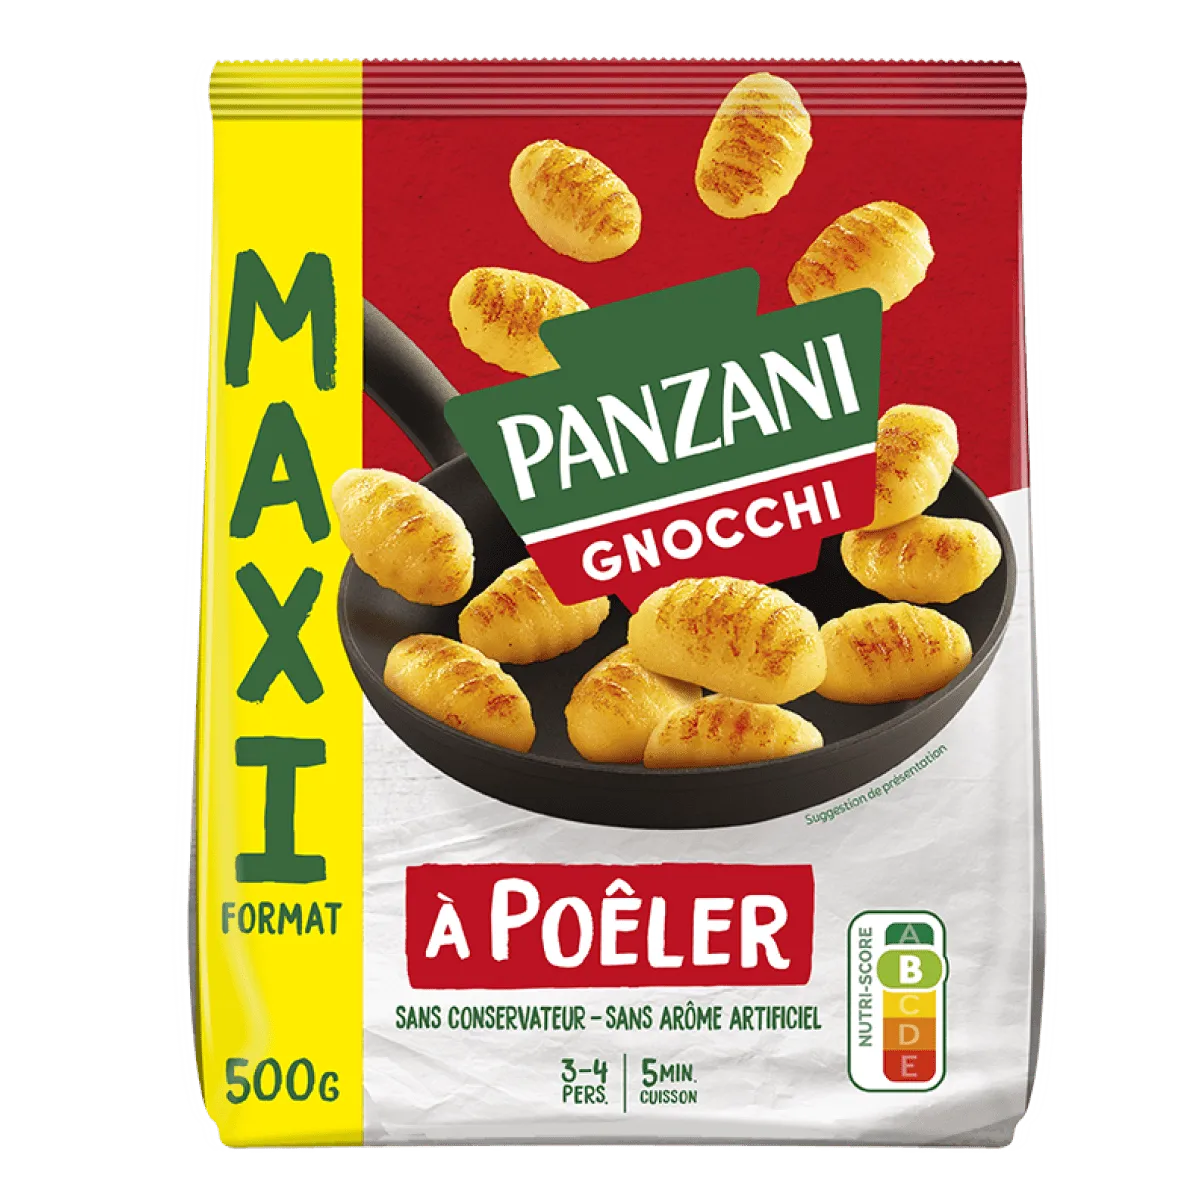 gnocchi_a_poeler_maxi_format_panzani